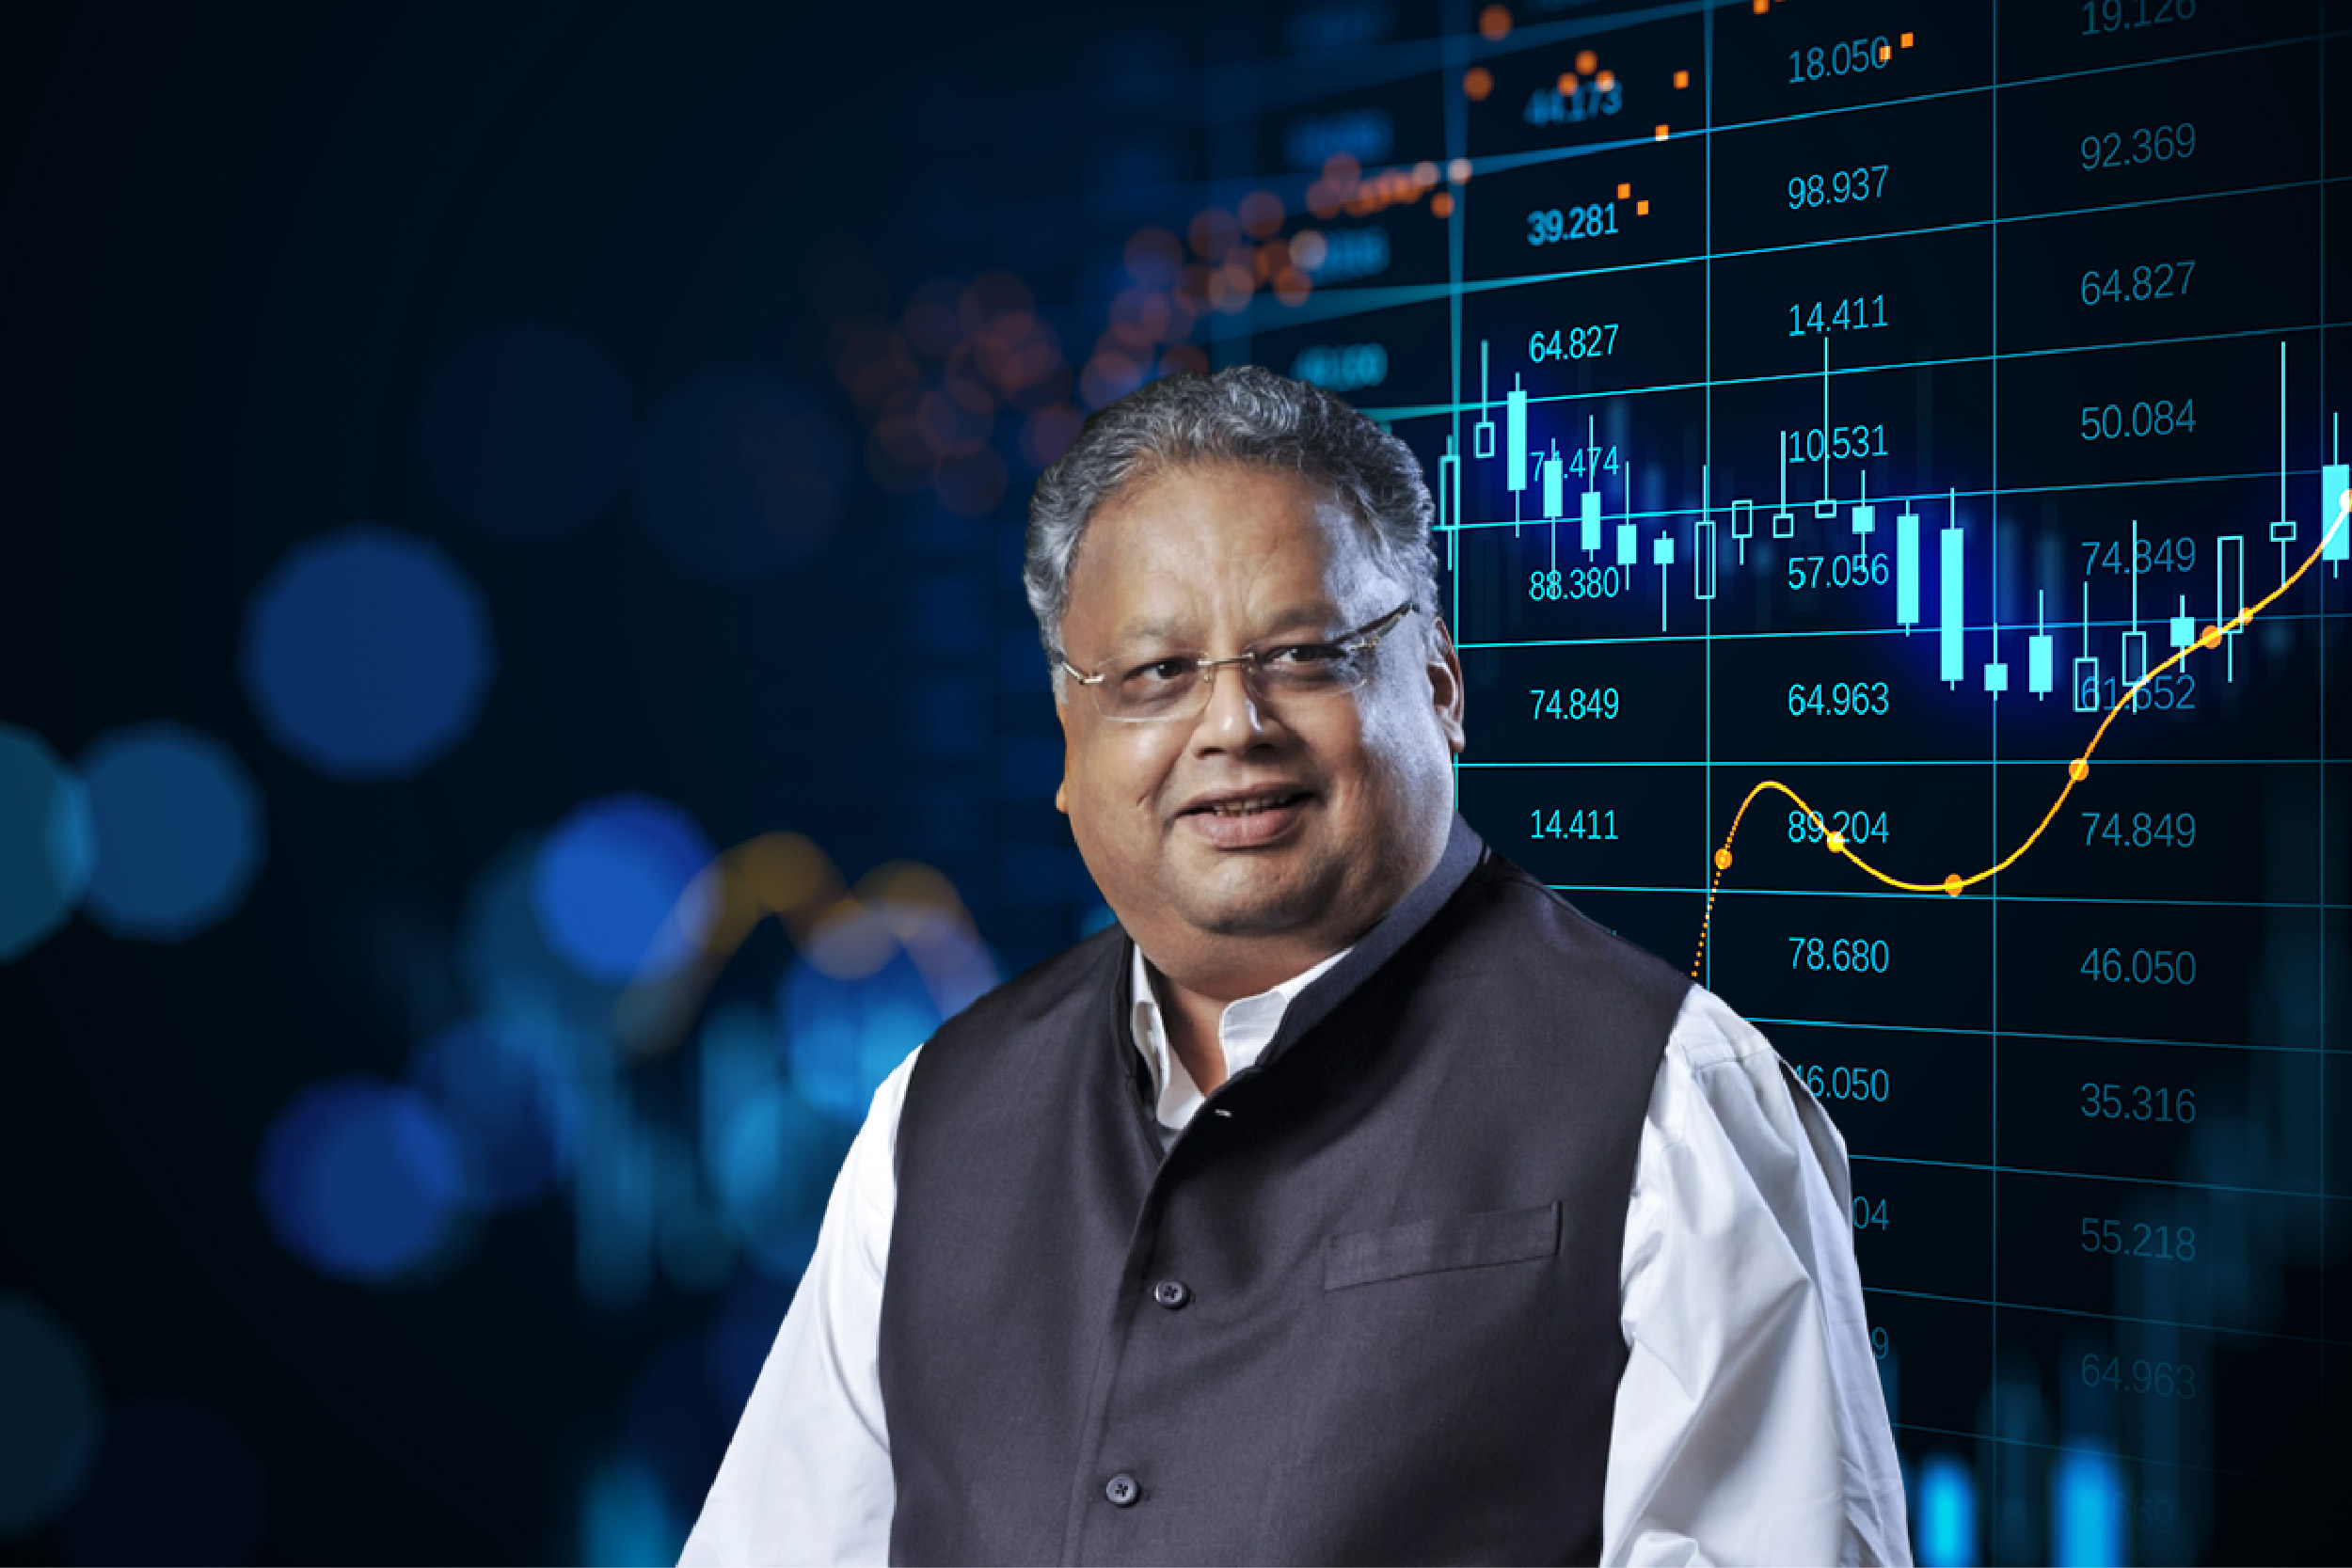 Tracing the path of Rakesh Jhunjhunwala's investments